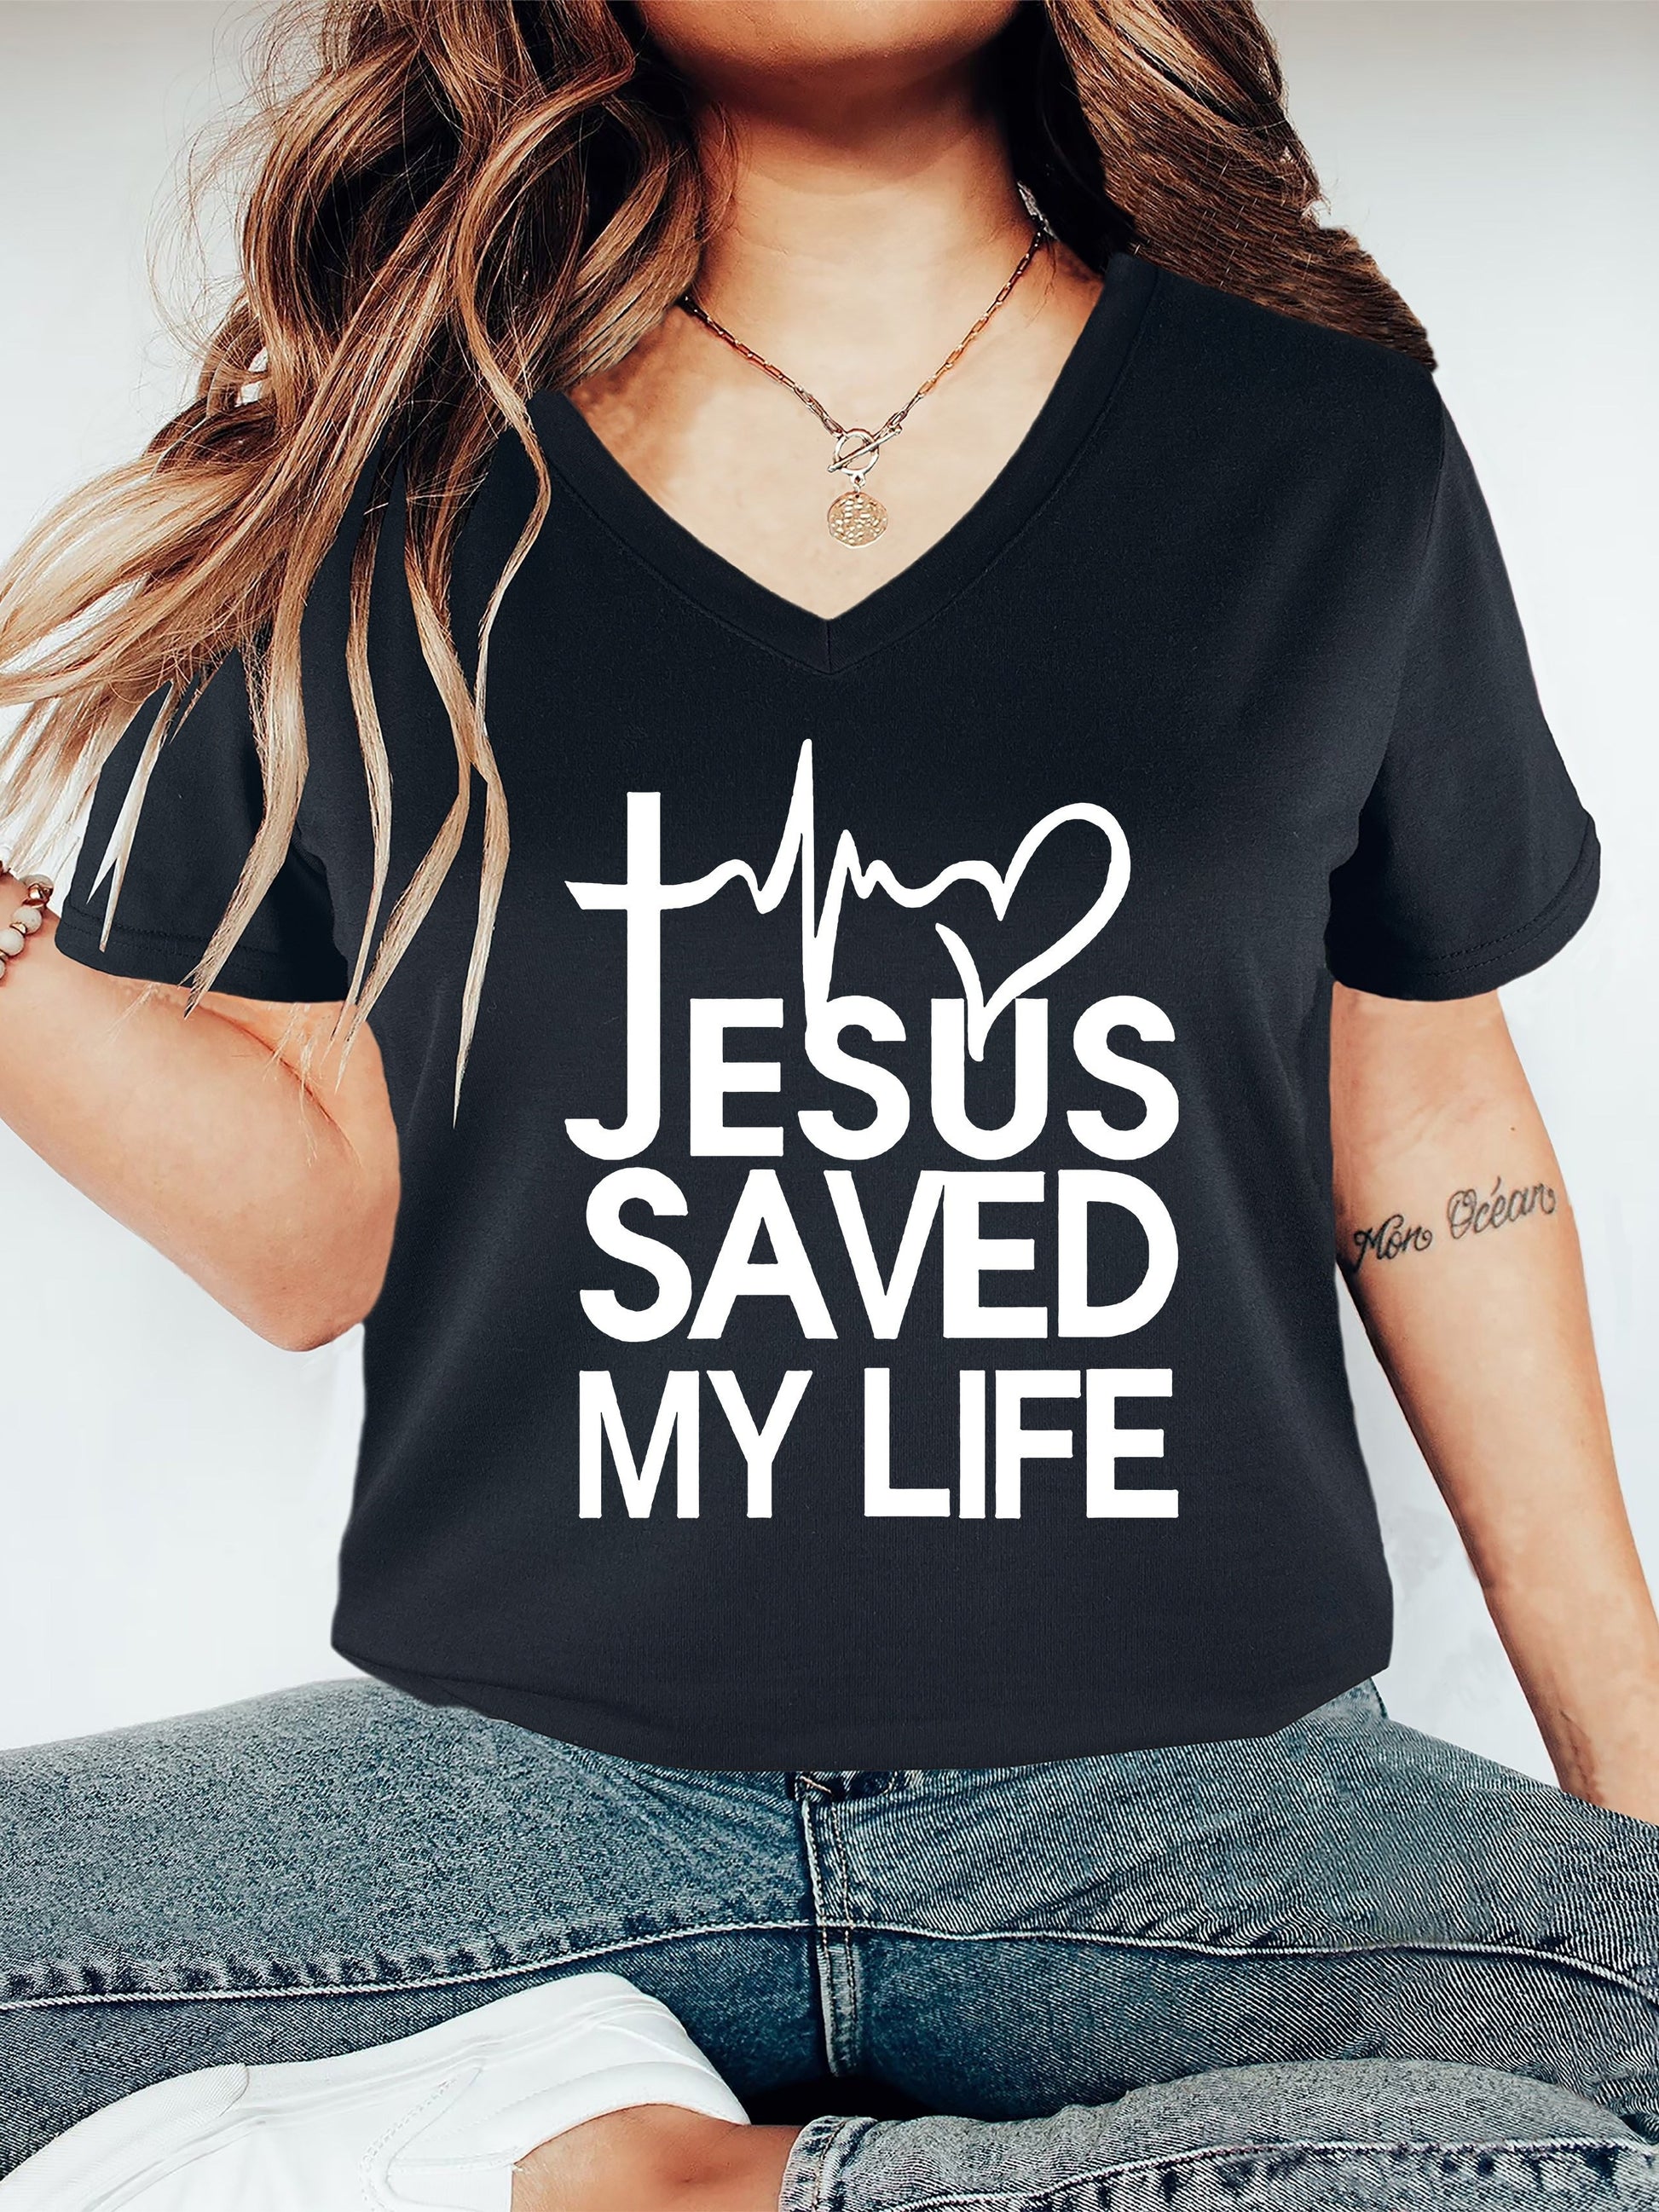 Jesus Saved My Life Women's Christian V Neck T-Shirt claimedbygoddesigns